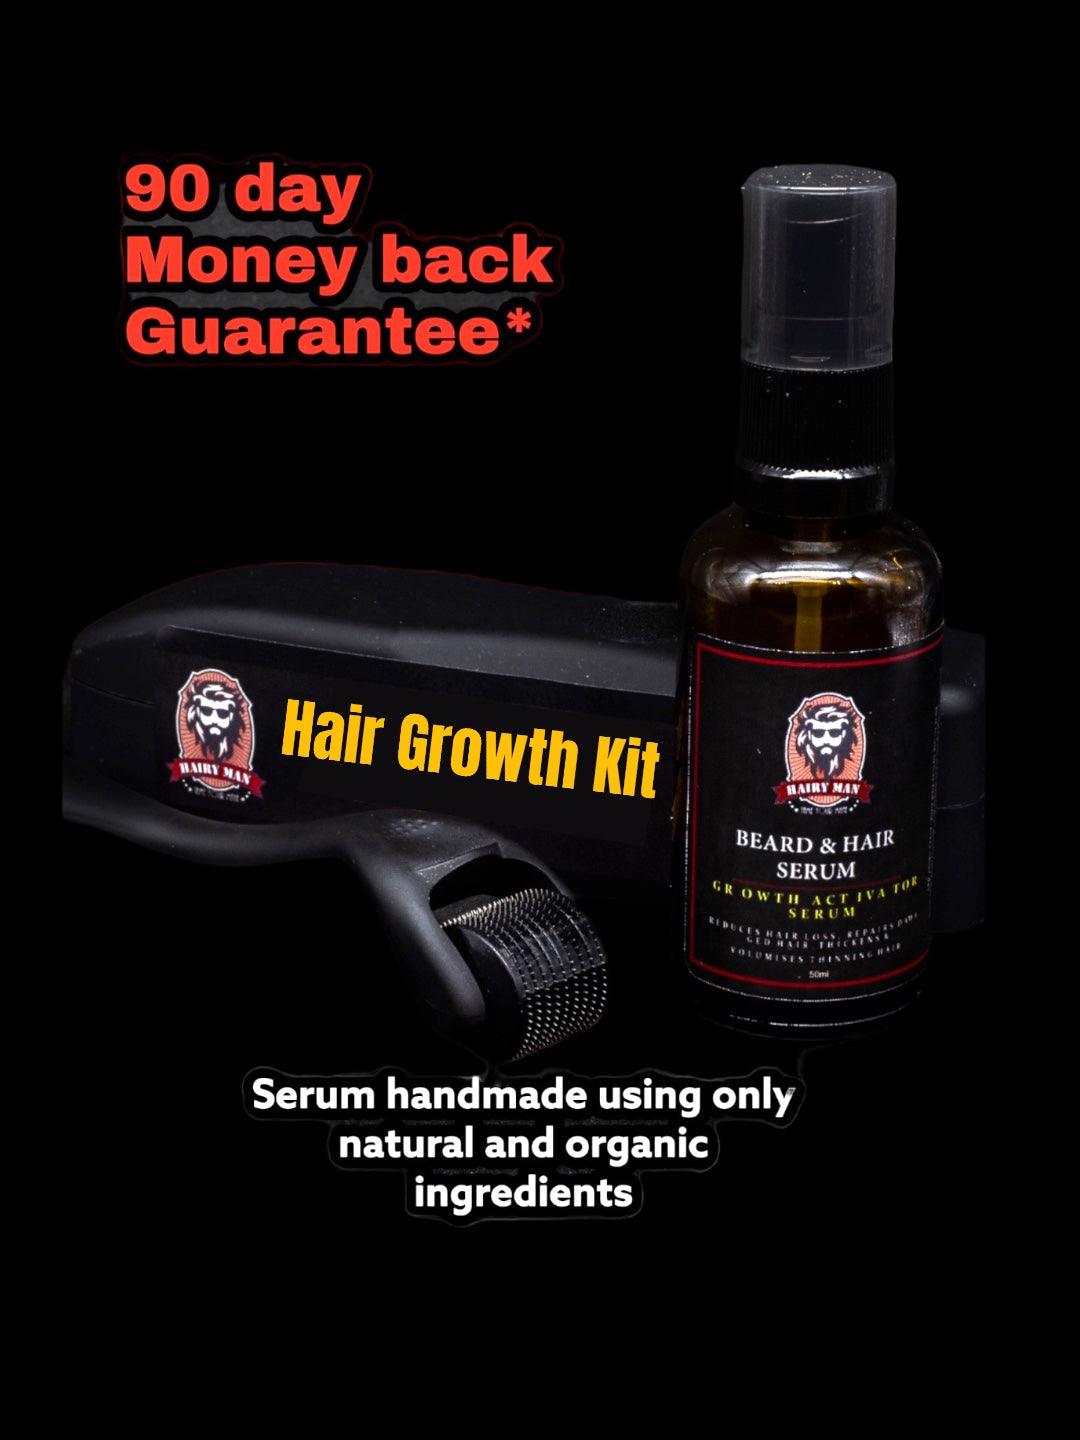 Hair Growth Kit - Hairy Man Care